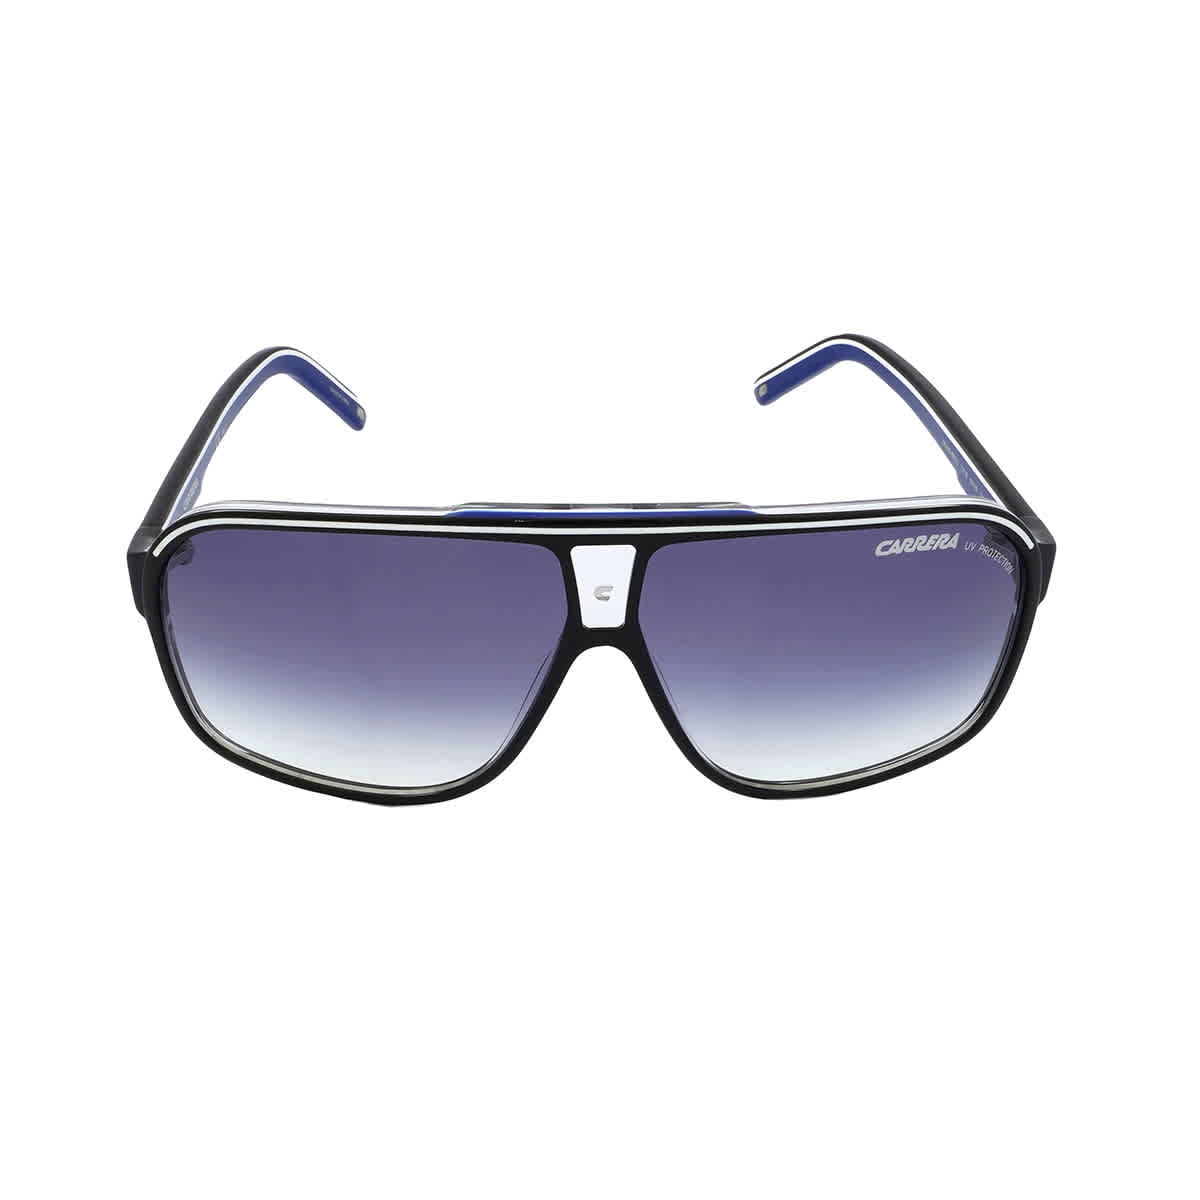 Share 293+ carrera rimless sunglasses super hot